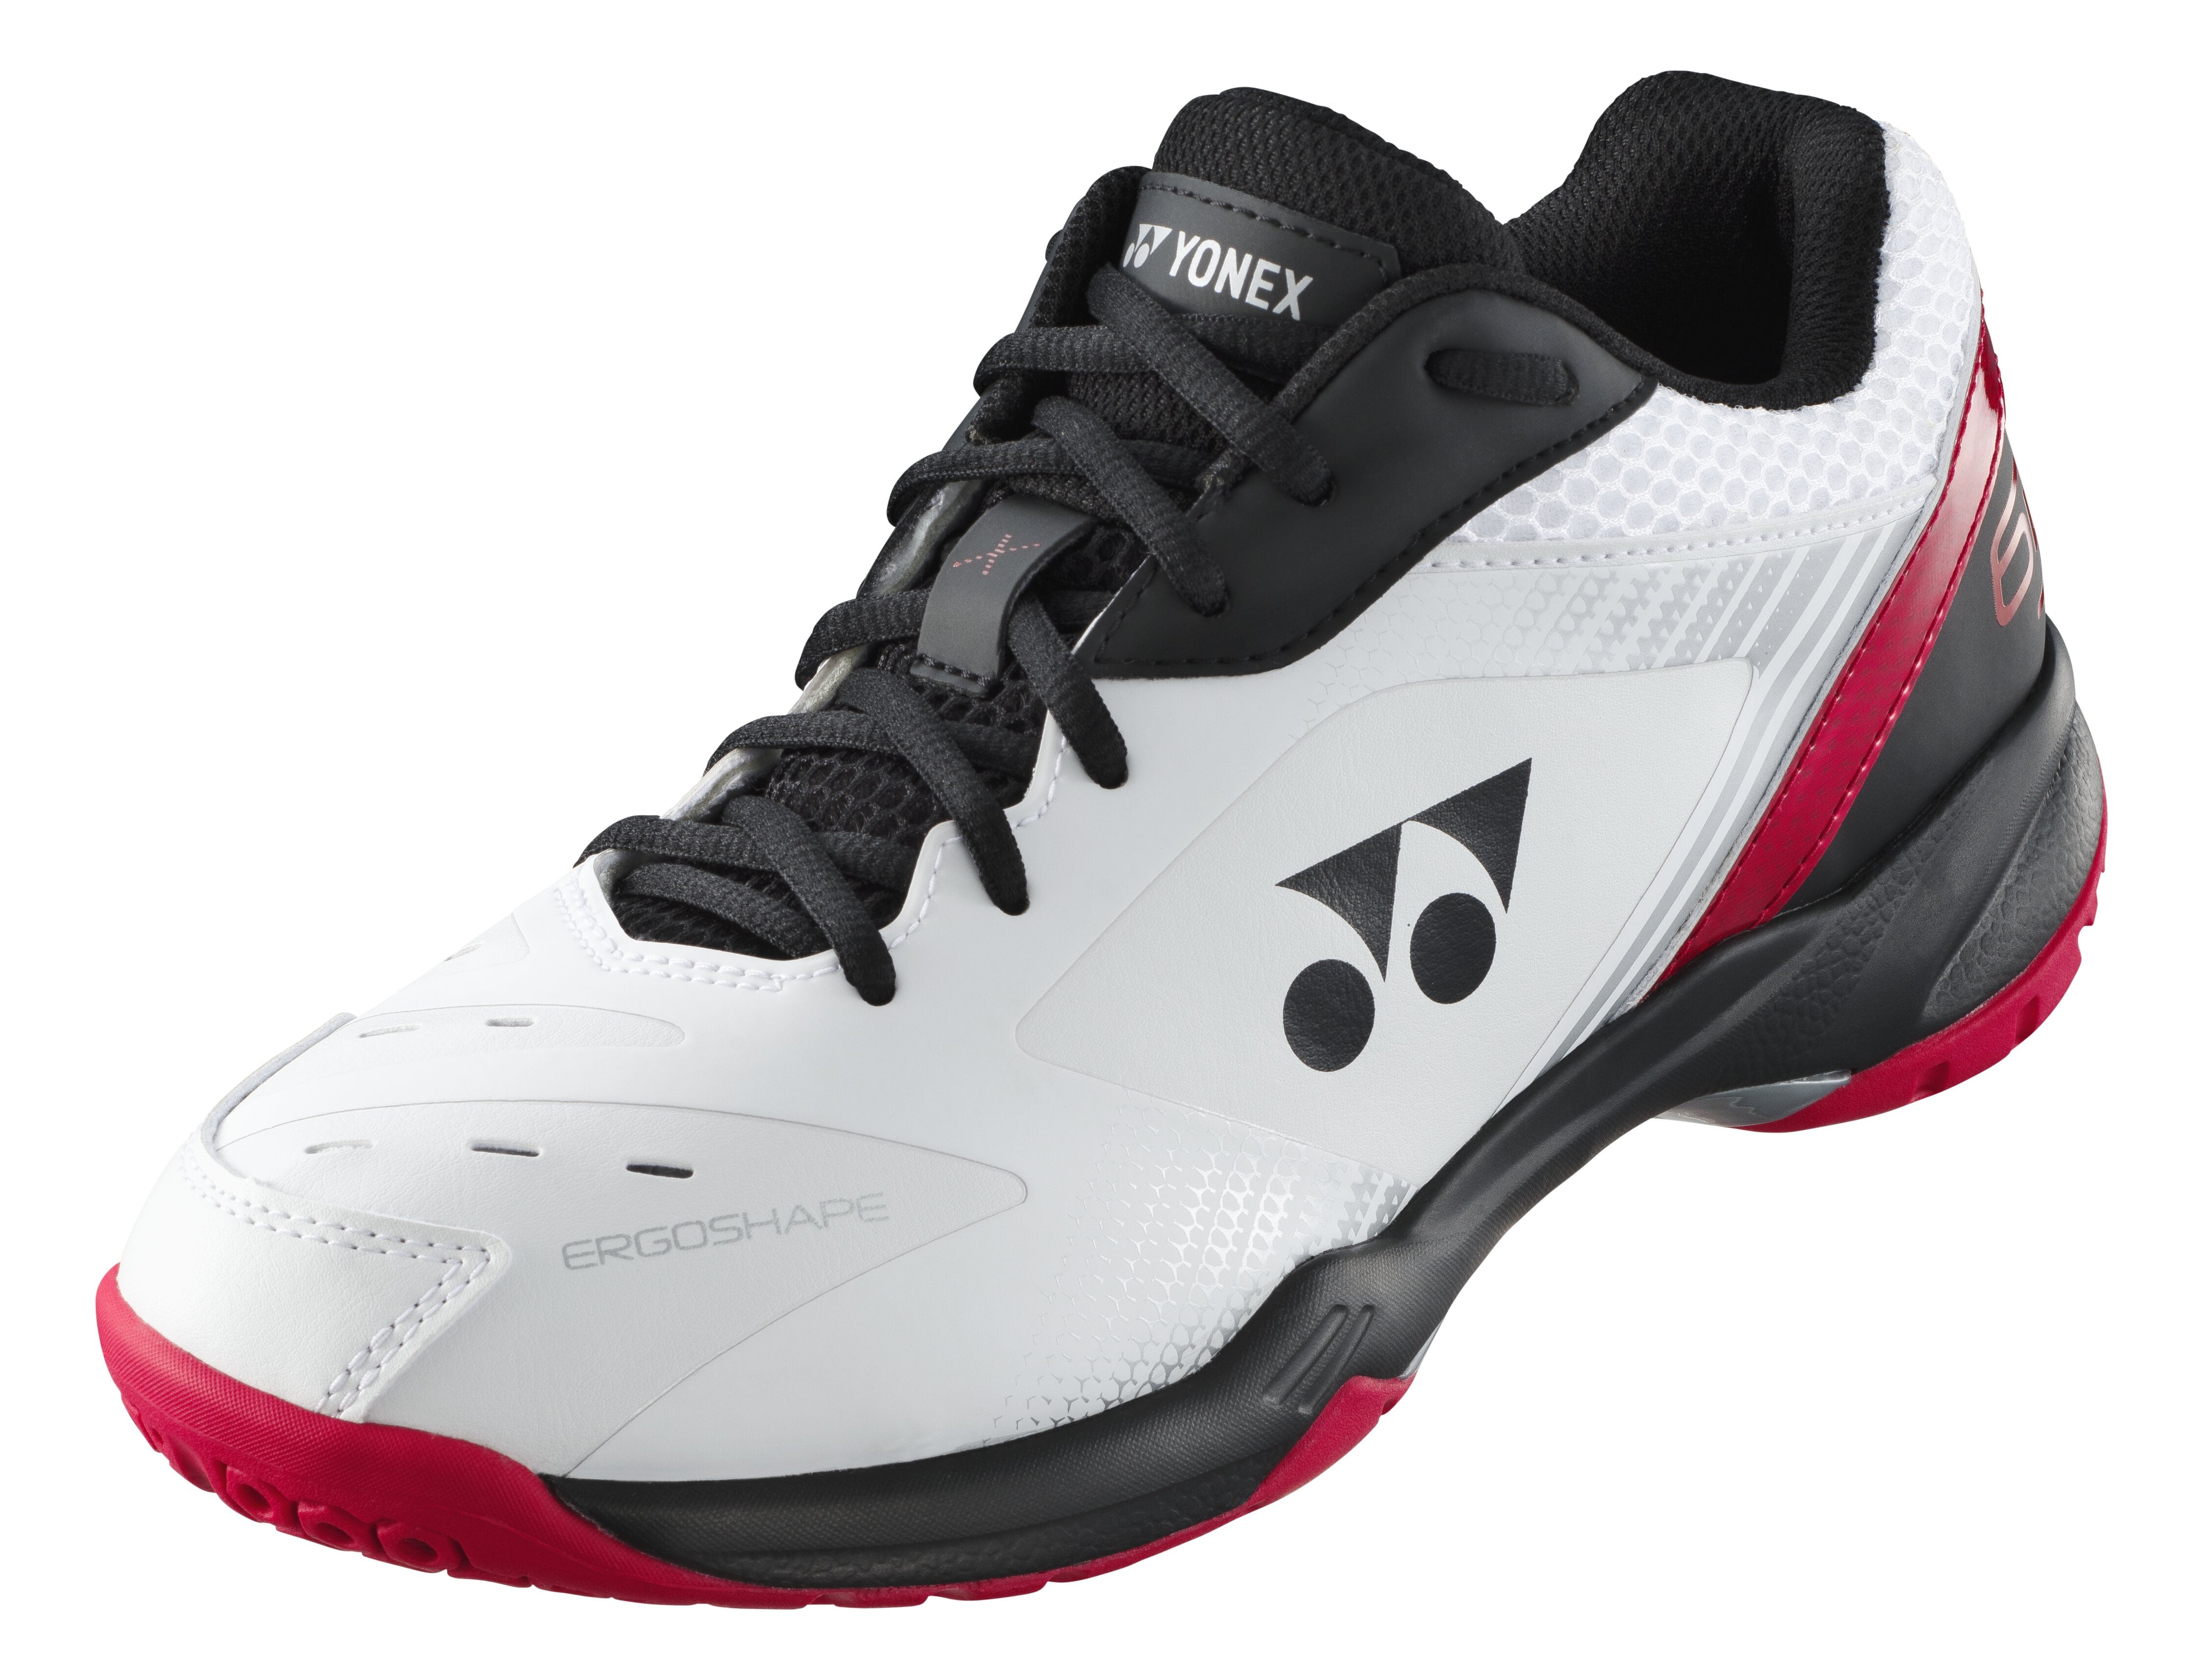 Yonex Unisex Power Cusion 36 Shoes Badminton Red Sneakers Casual Shoe SHB-36EX 